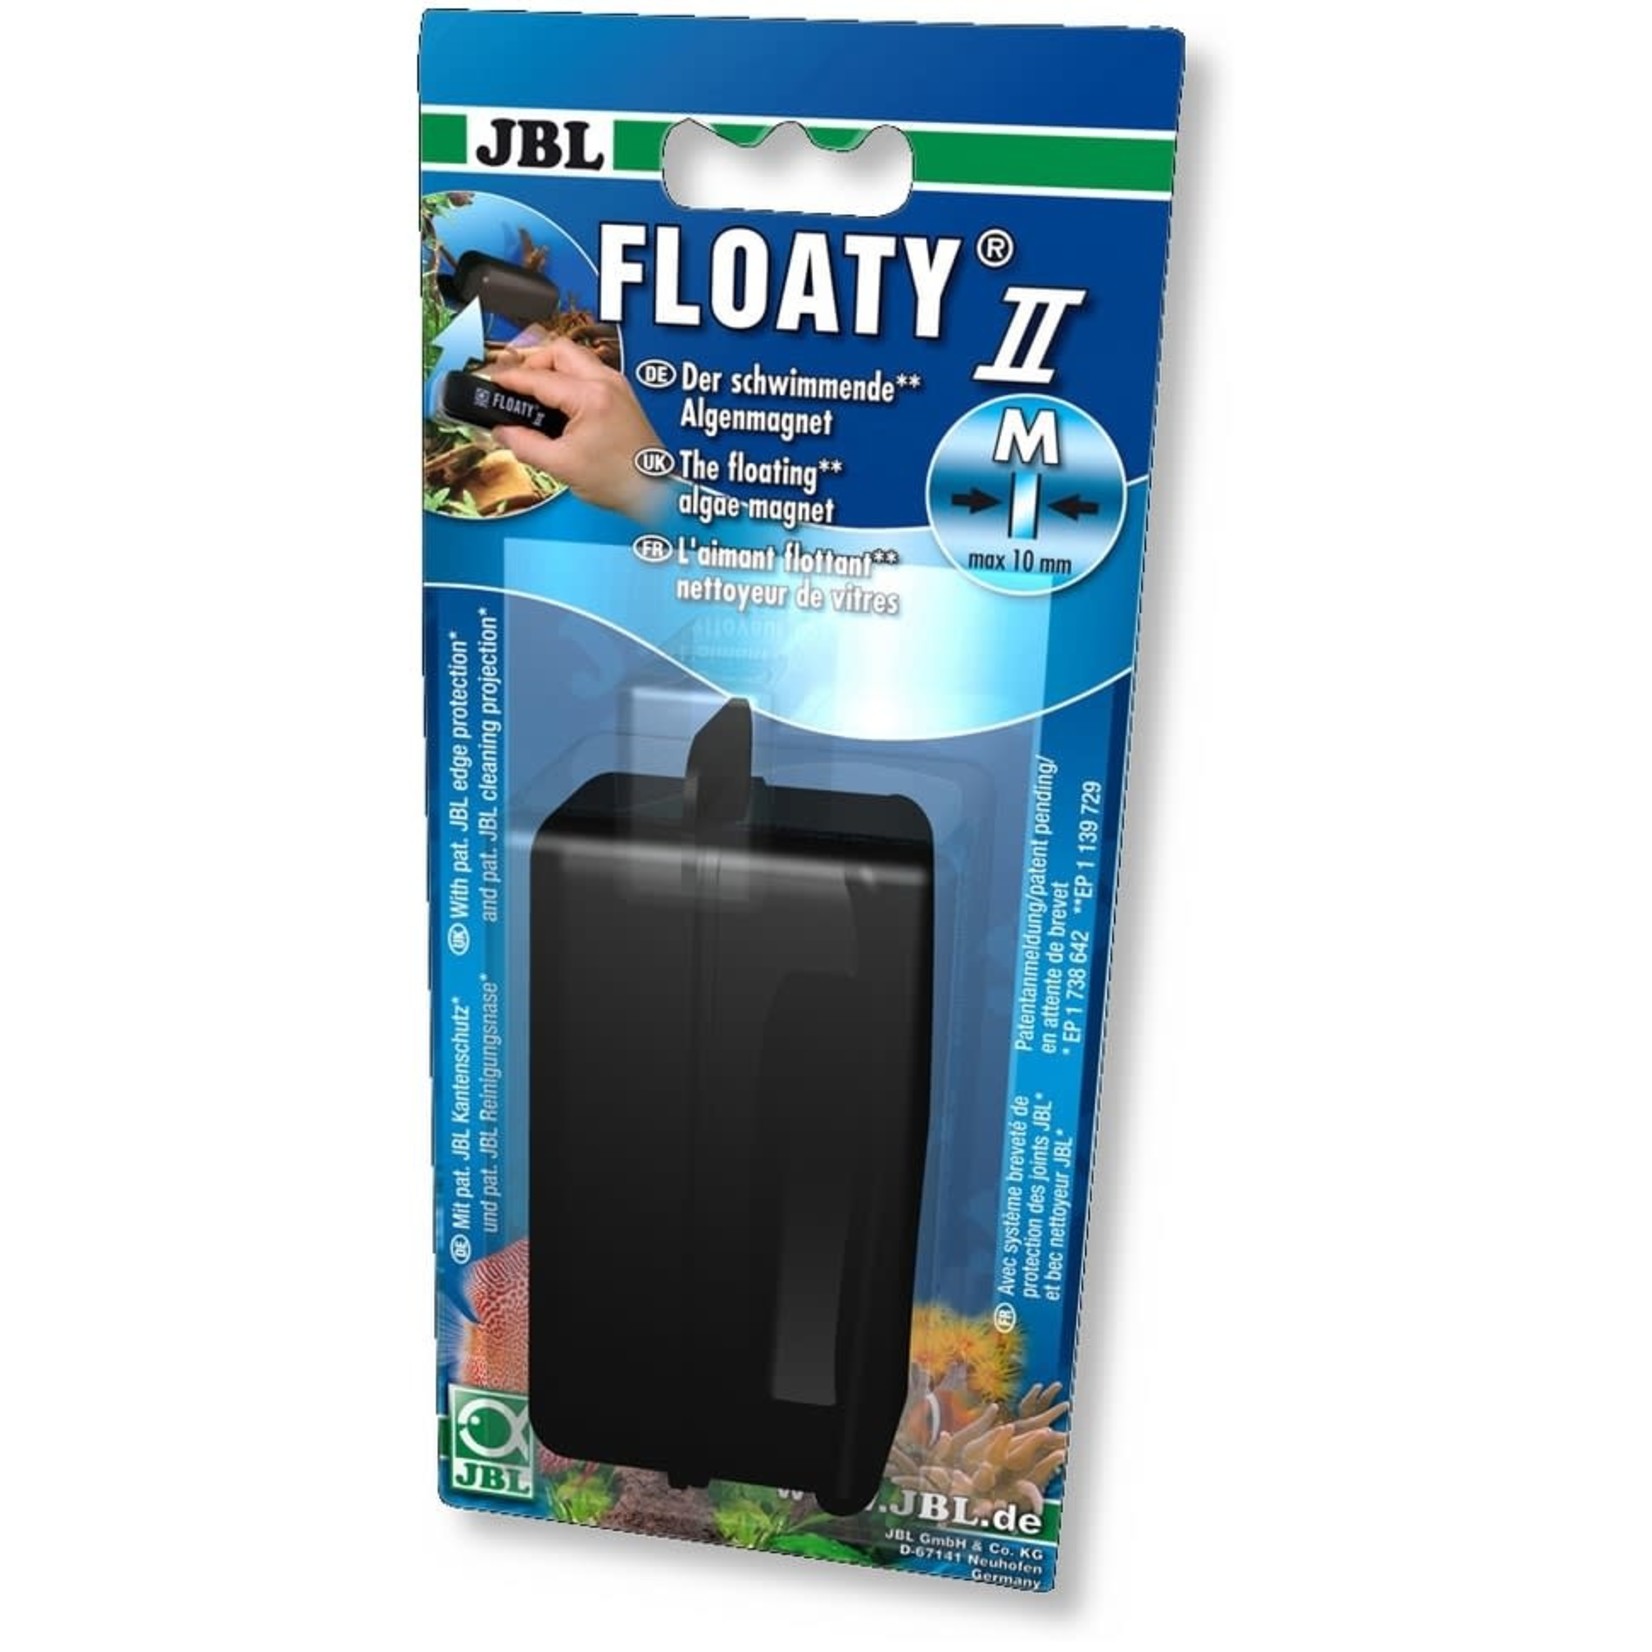 JBL JBL FLOATY II Magnetic Glass Cleaner - 10mm Glass